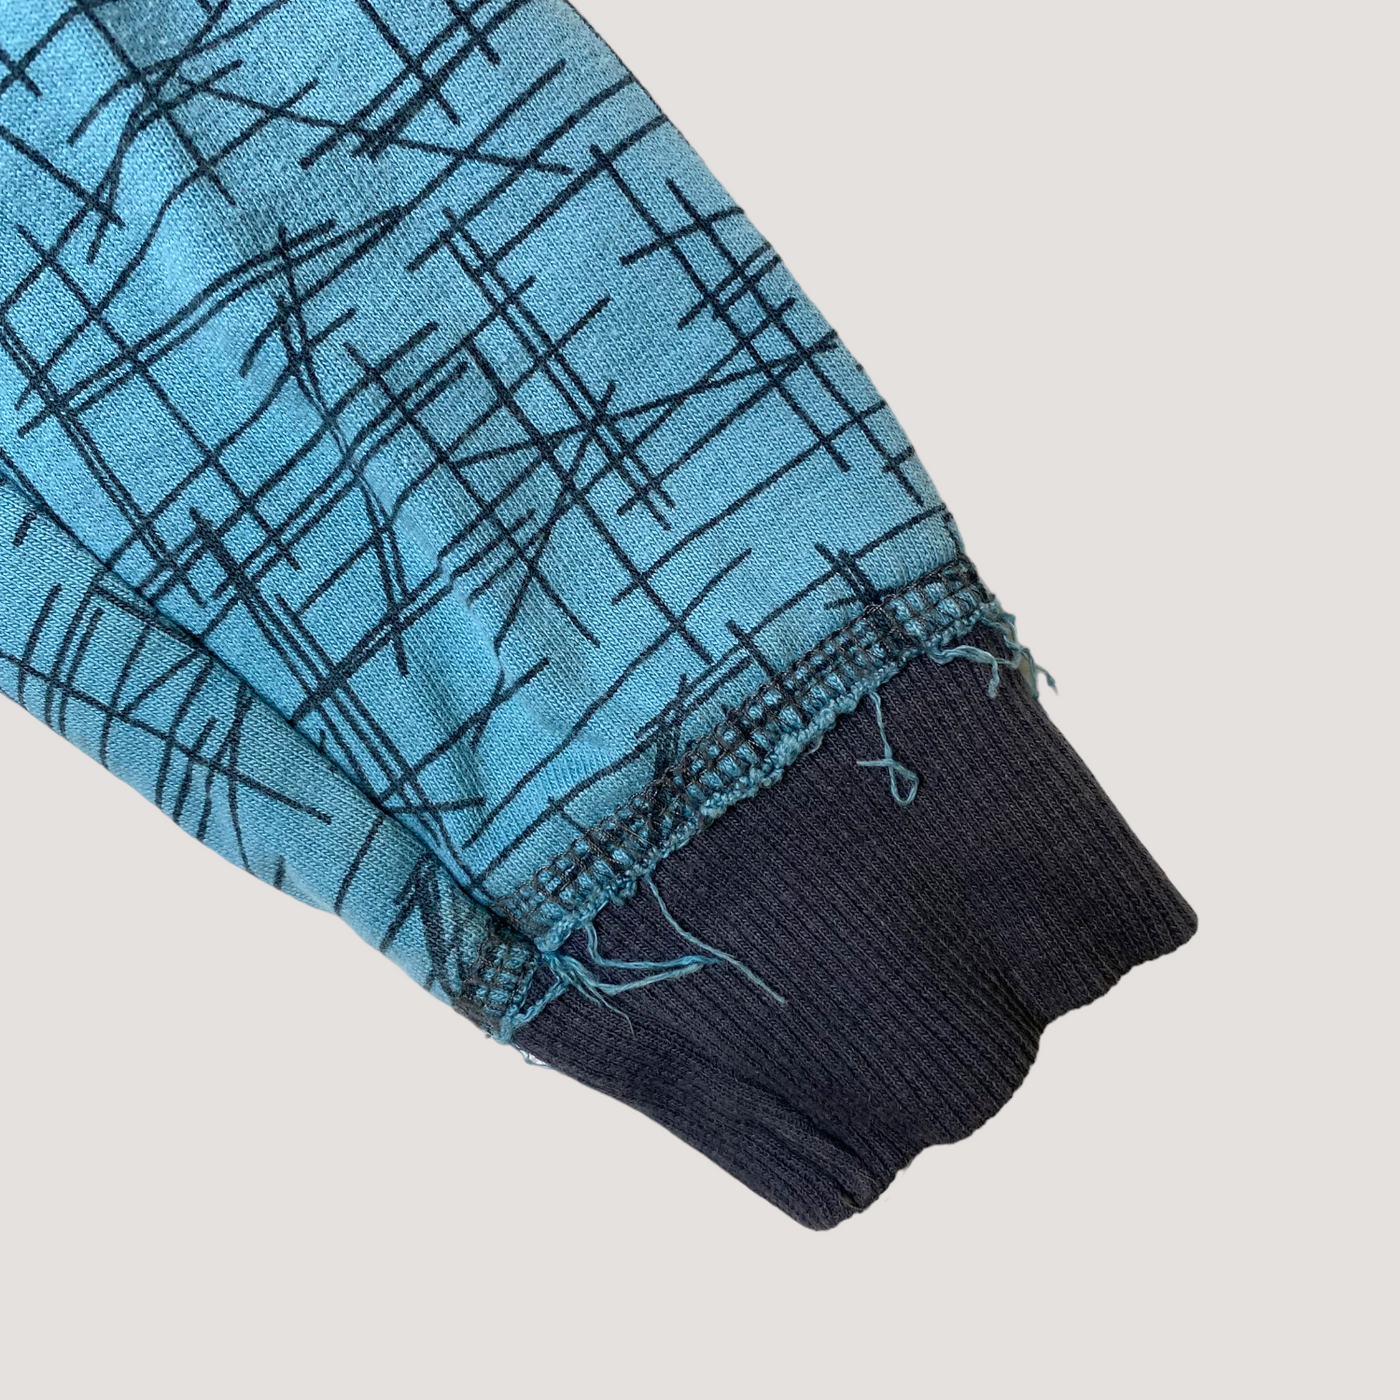 Mainio zipper sweat hoodie, powder blue | 98/104cm